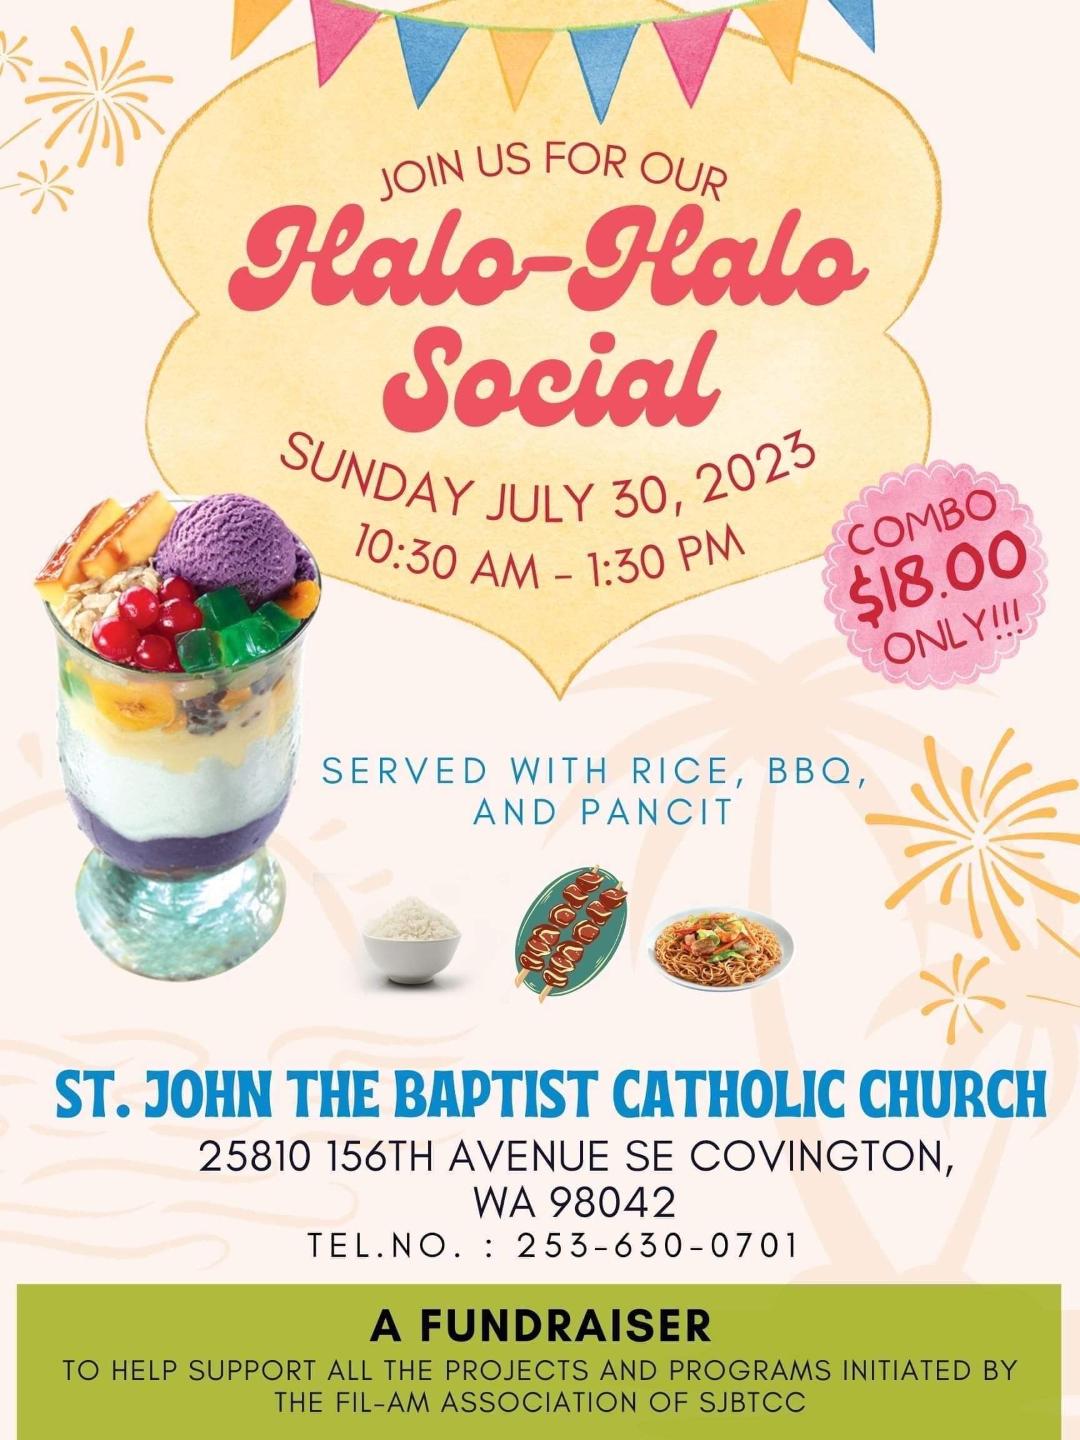 Fil-Am Association of St. John the Baptist Halo Halo Social